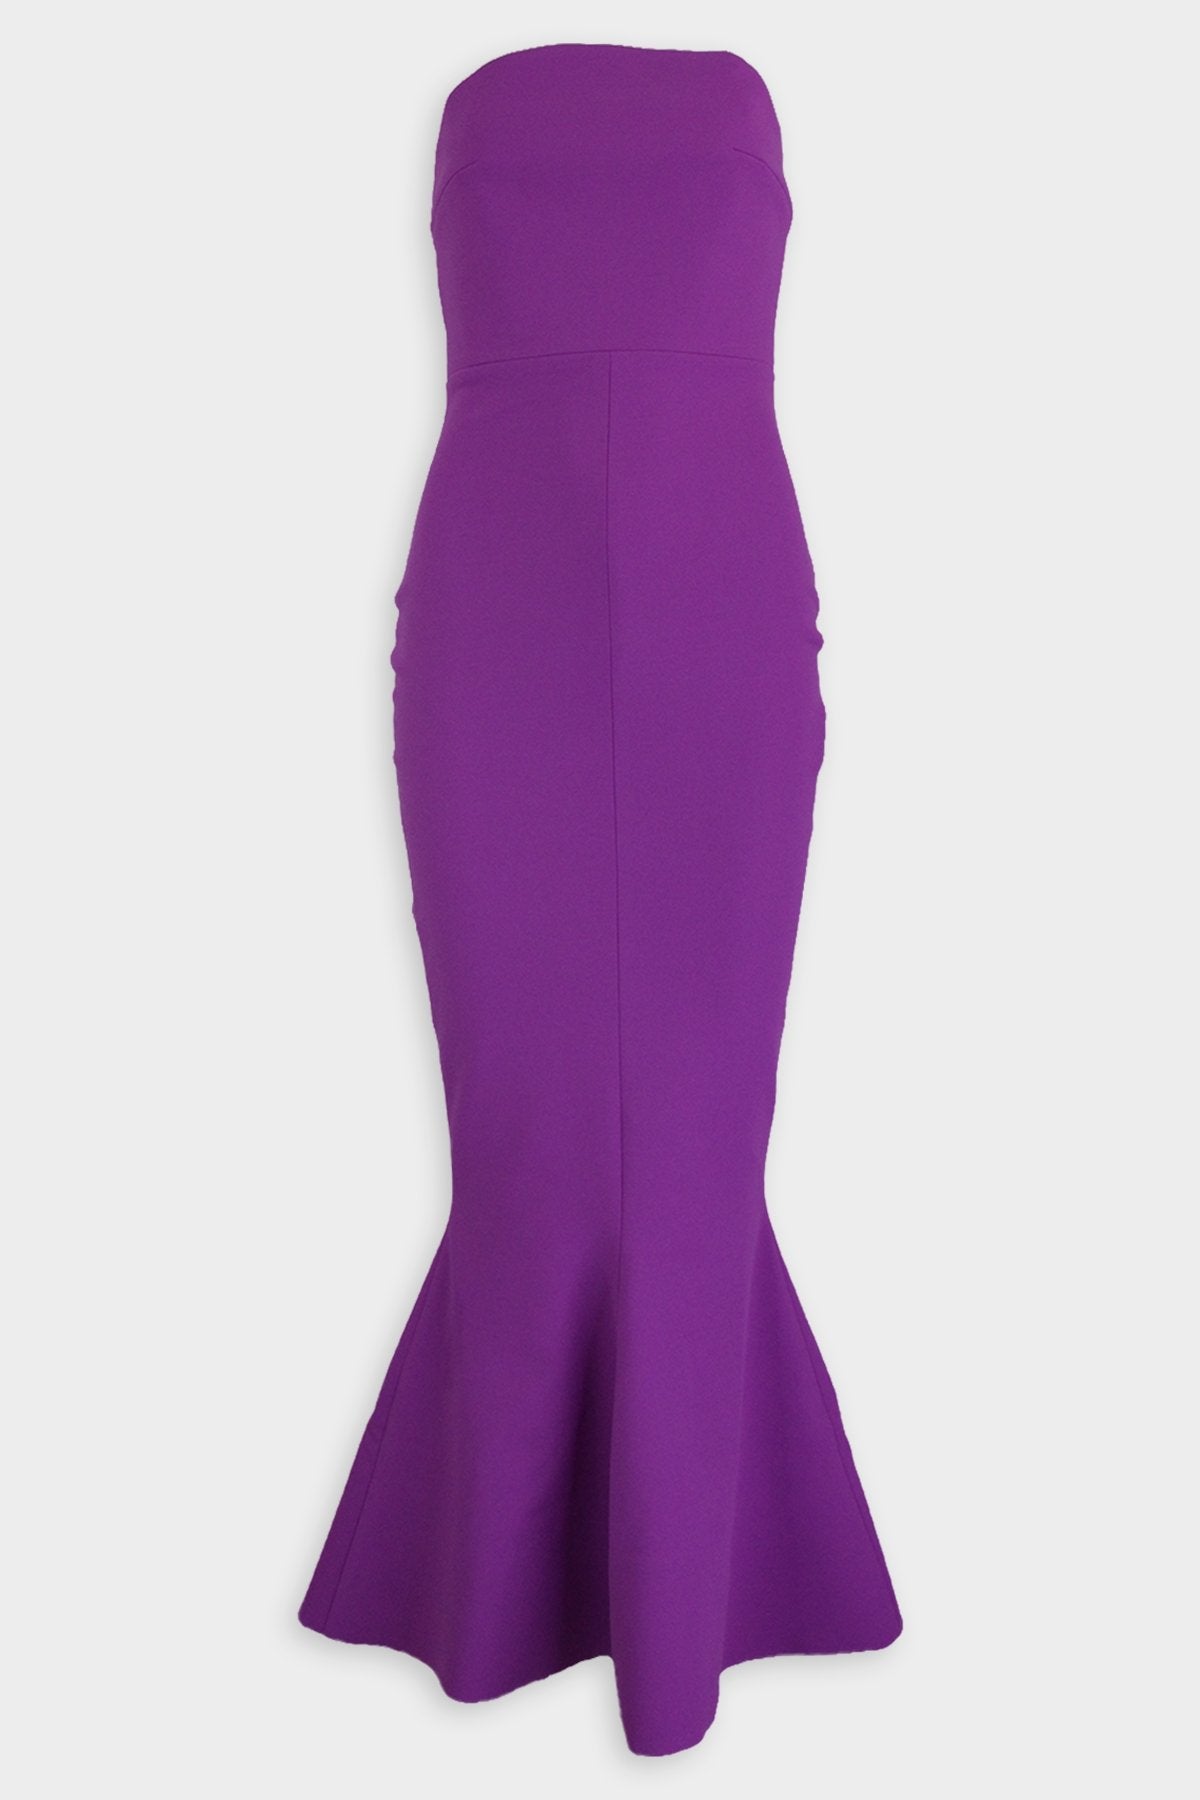 Amara Midi Dress in Ultra Purple - shop-olivia.com